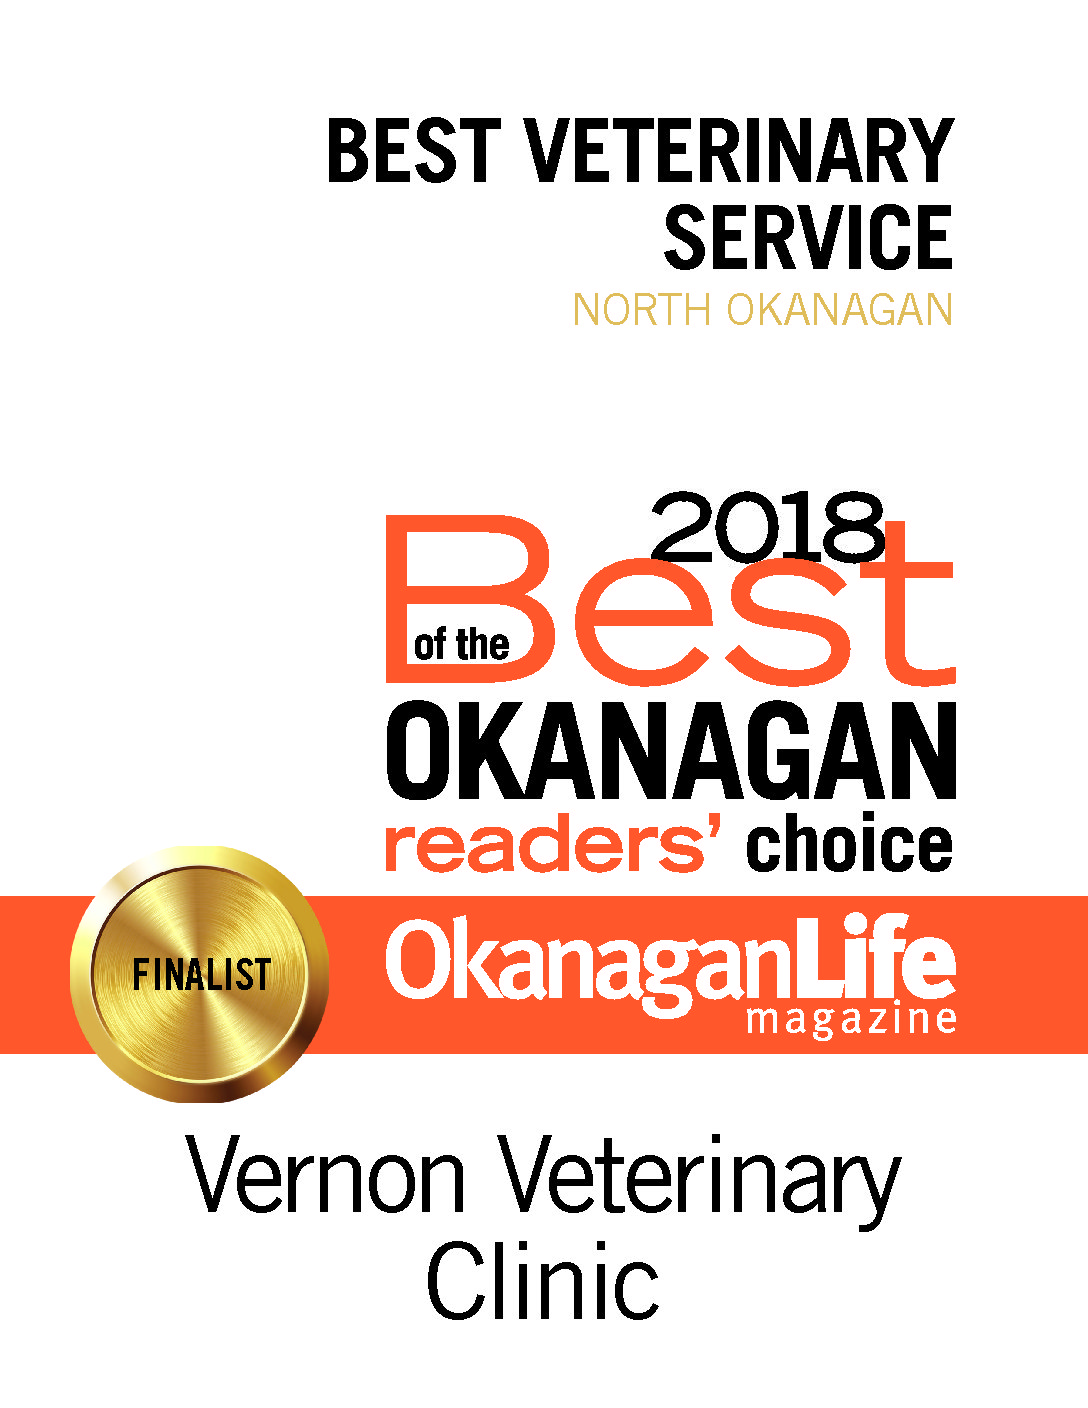 Vernon Veterinary Clinic